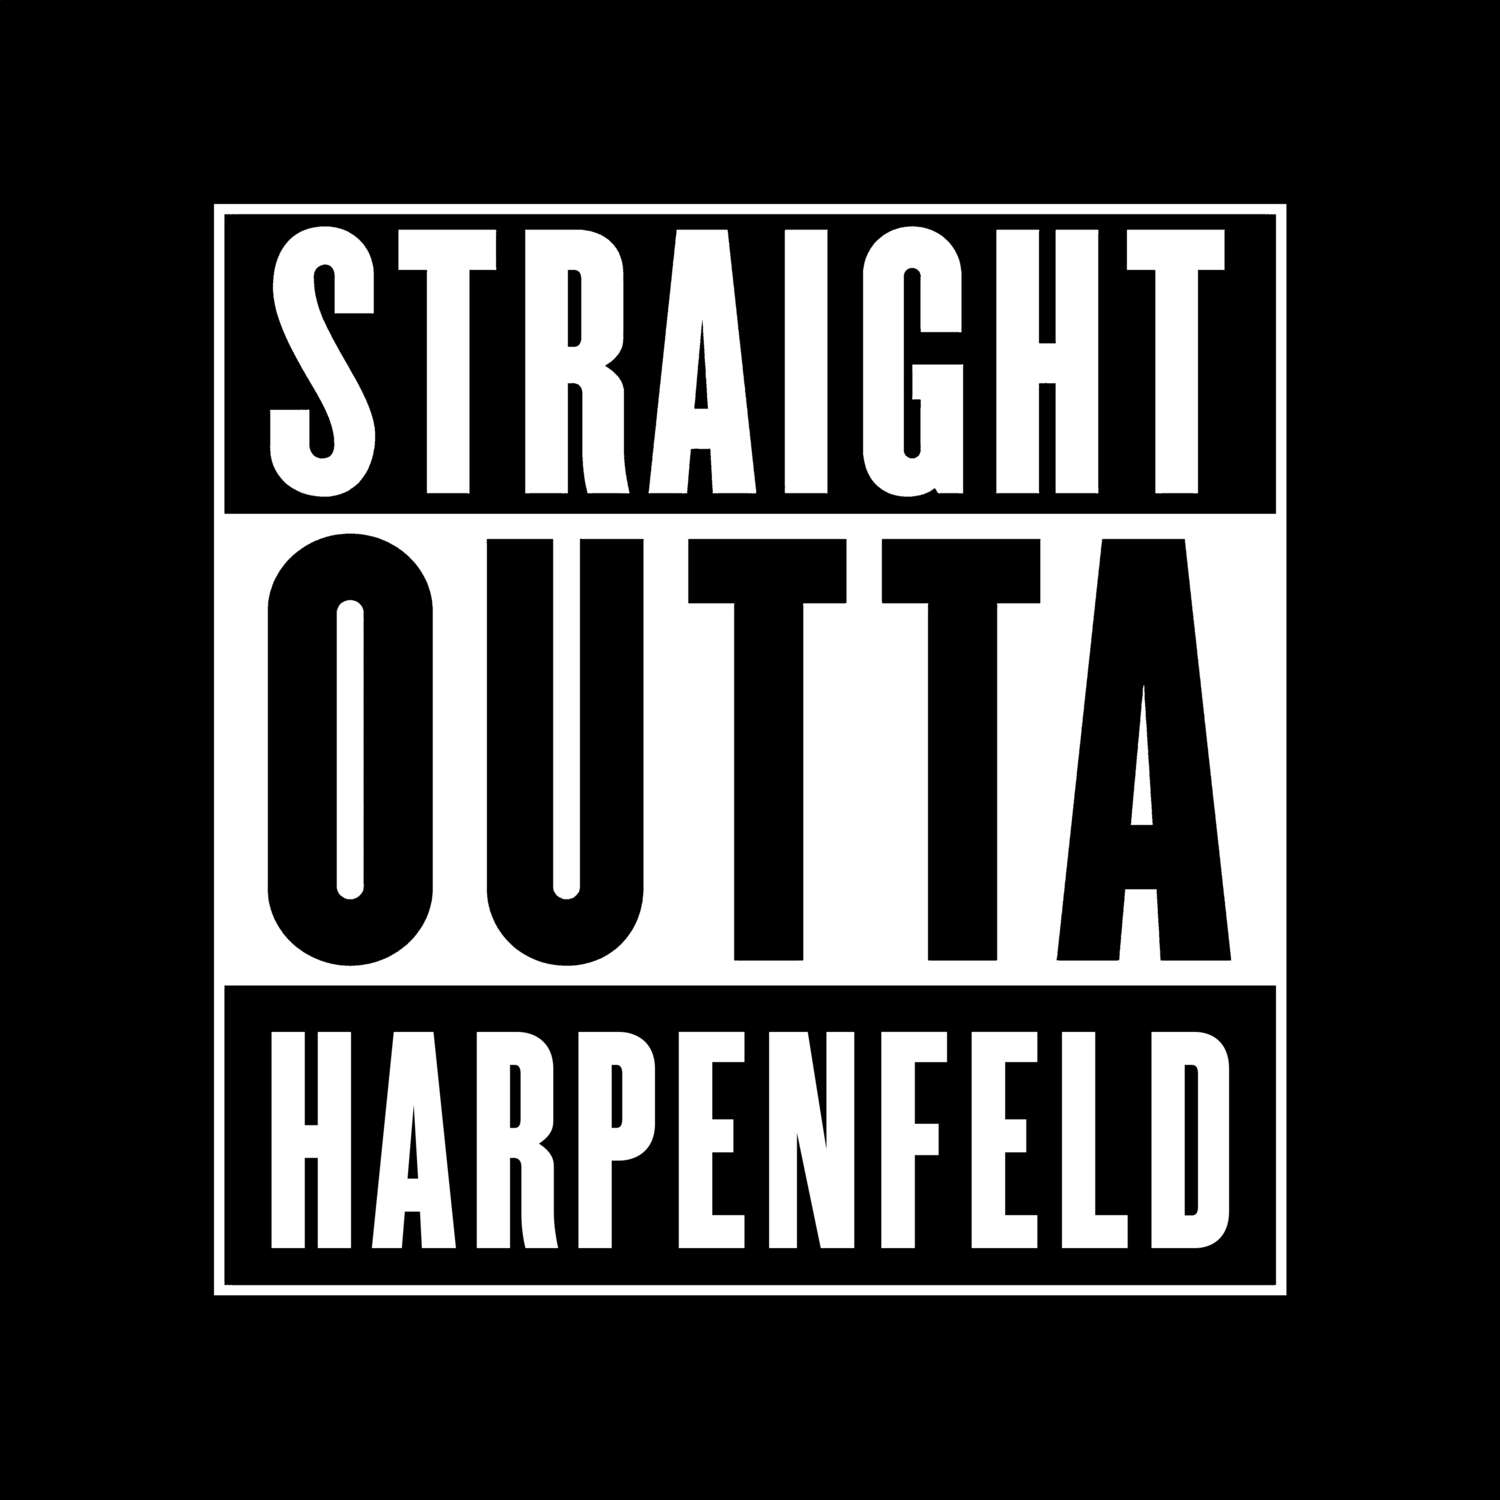 Harpenfeld T-Shirt »Straight Outta«